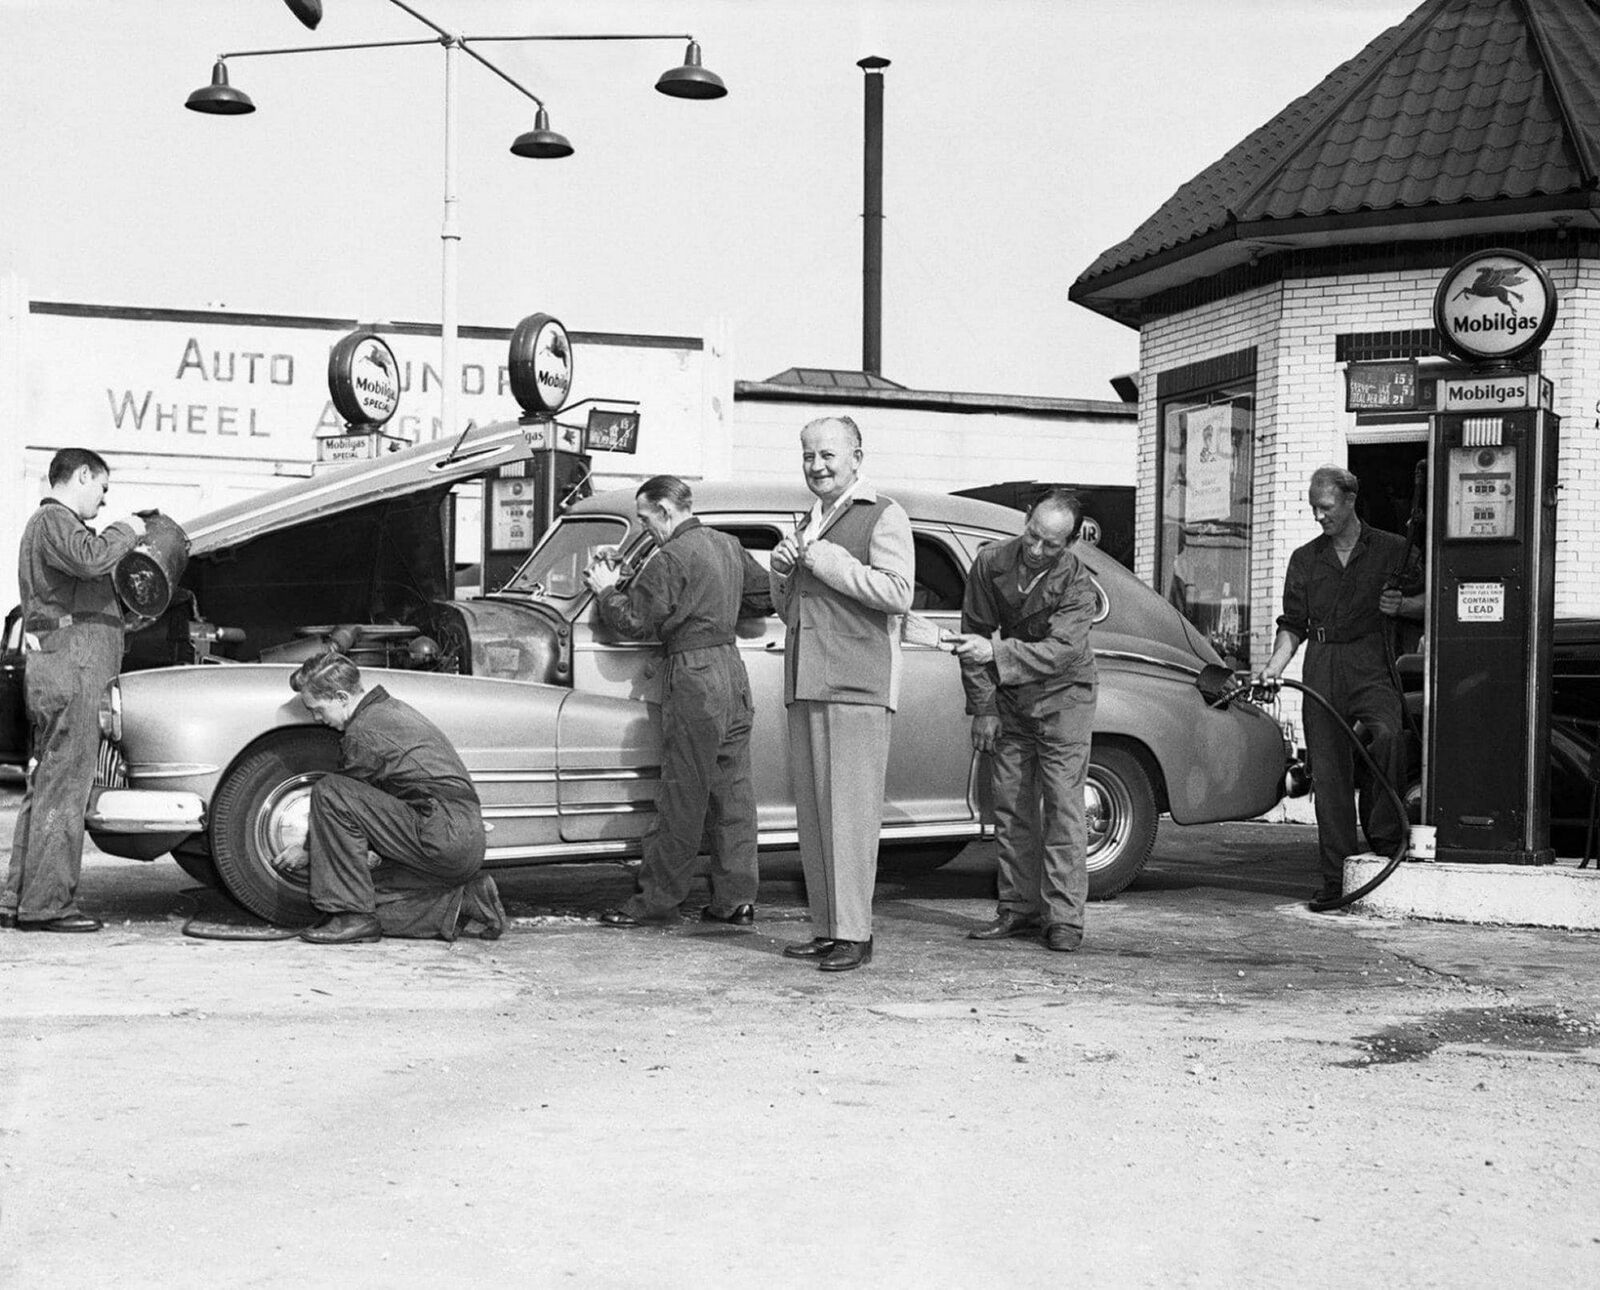 1940s MOBIL SERVICE STATION Photo  (177-E)